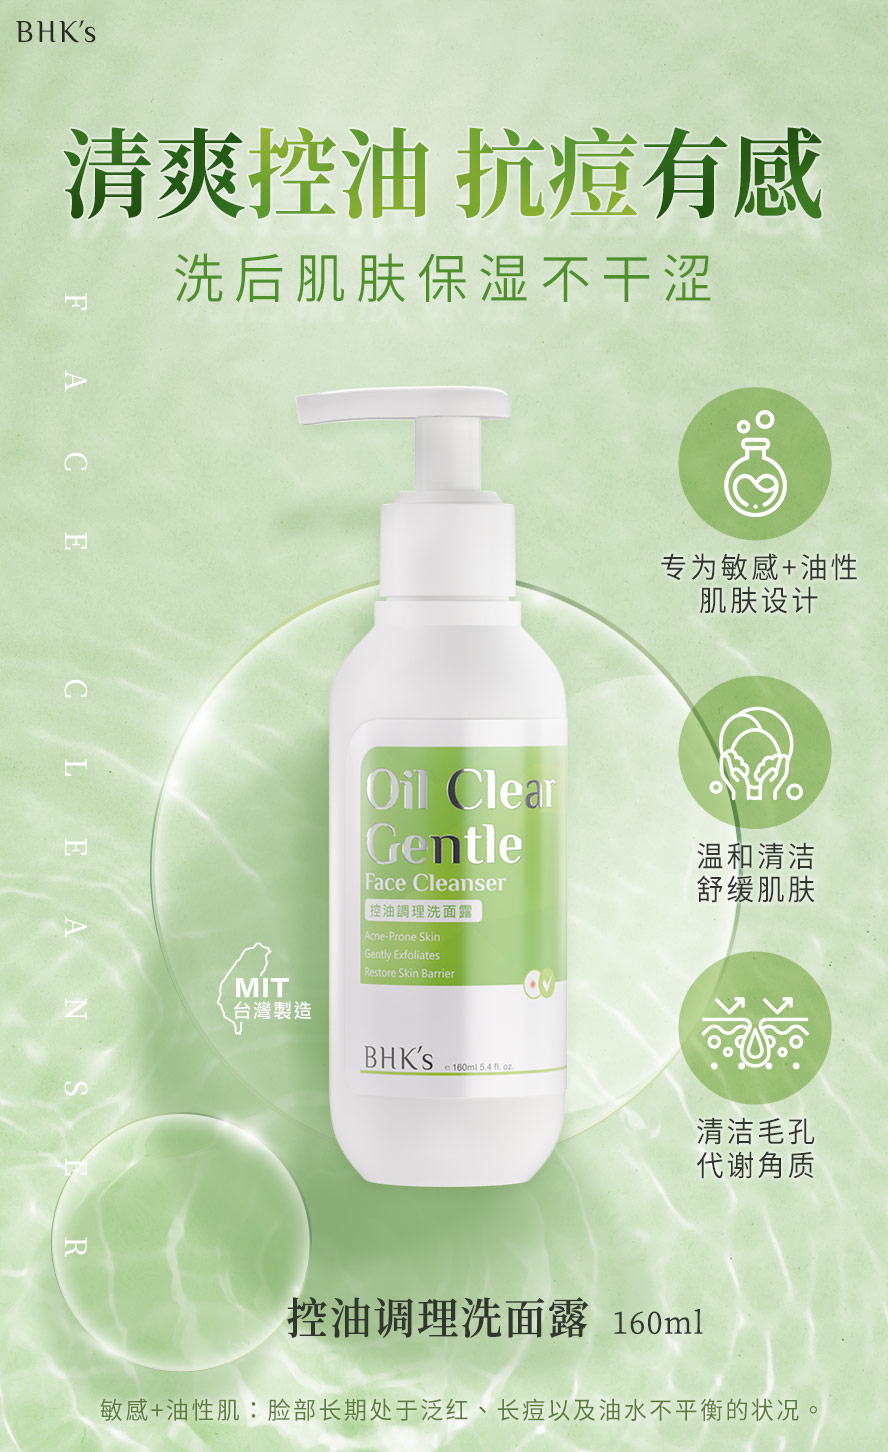 BHK's控油调理洗面露适合敏油肌、痘痘肌使用。